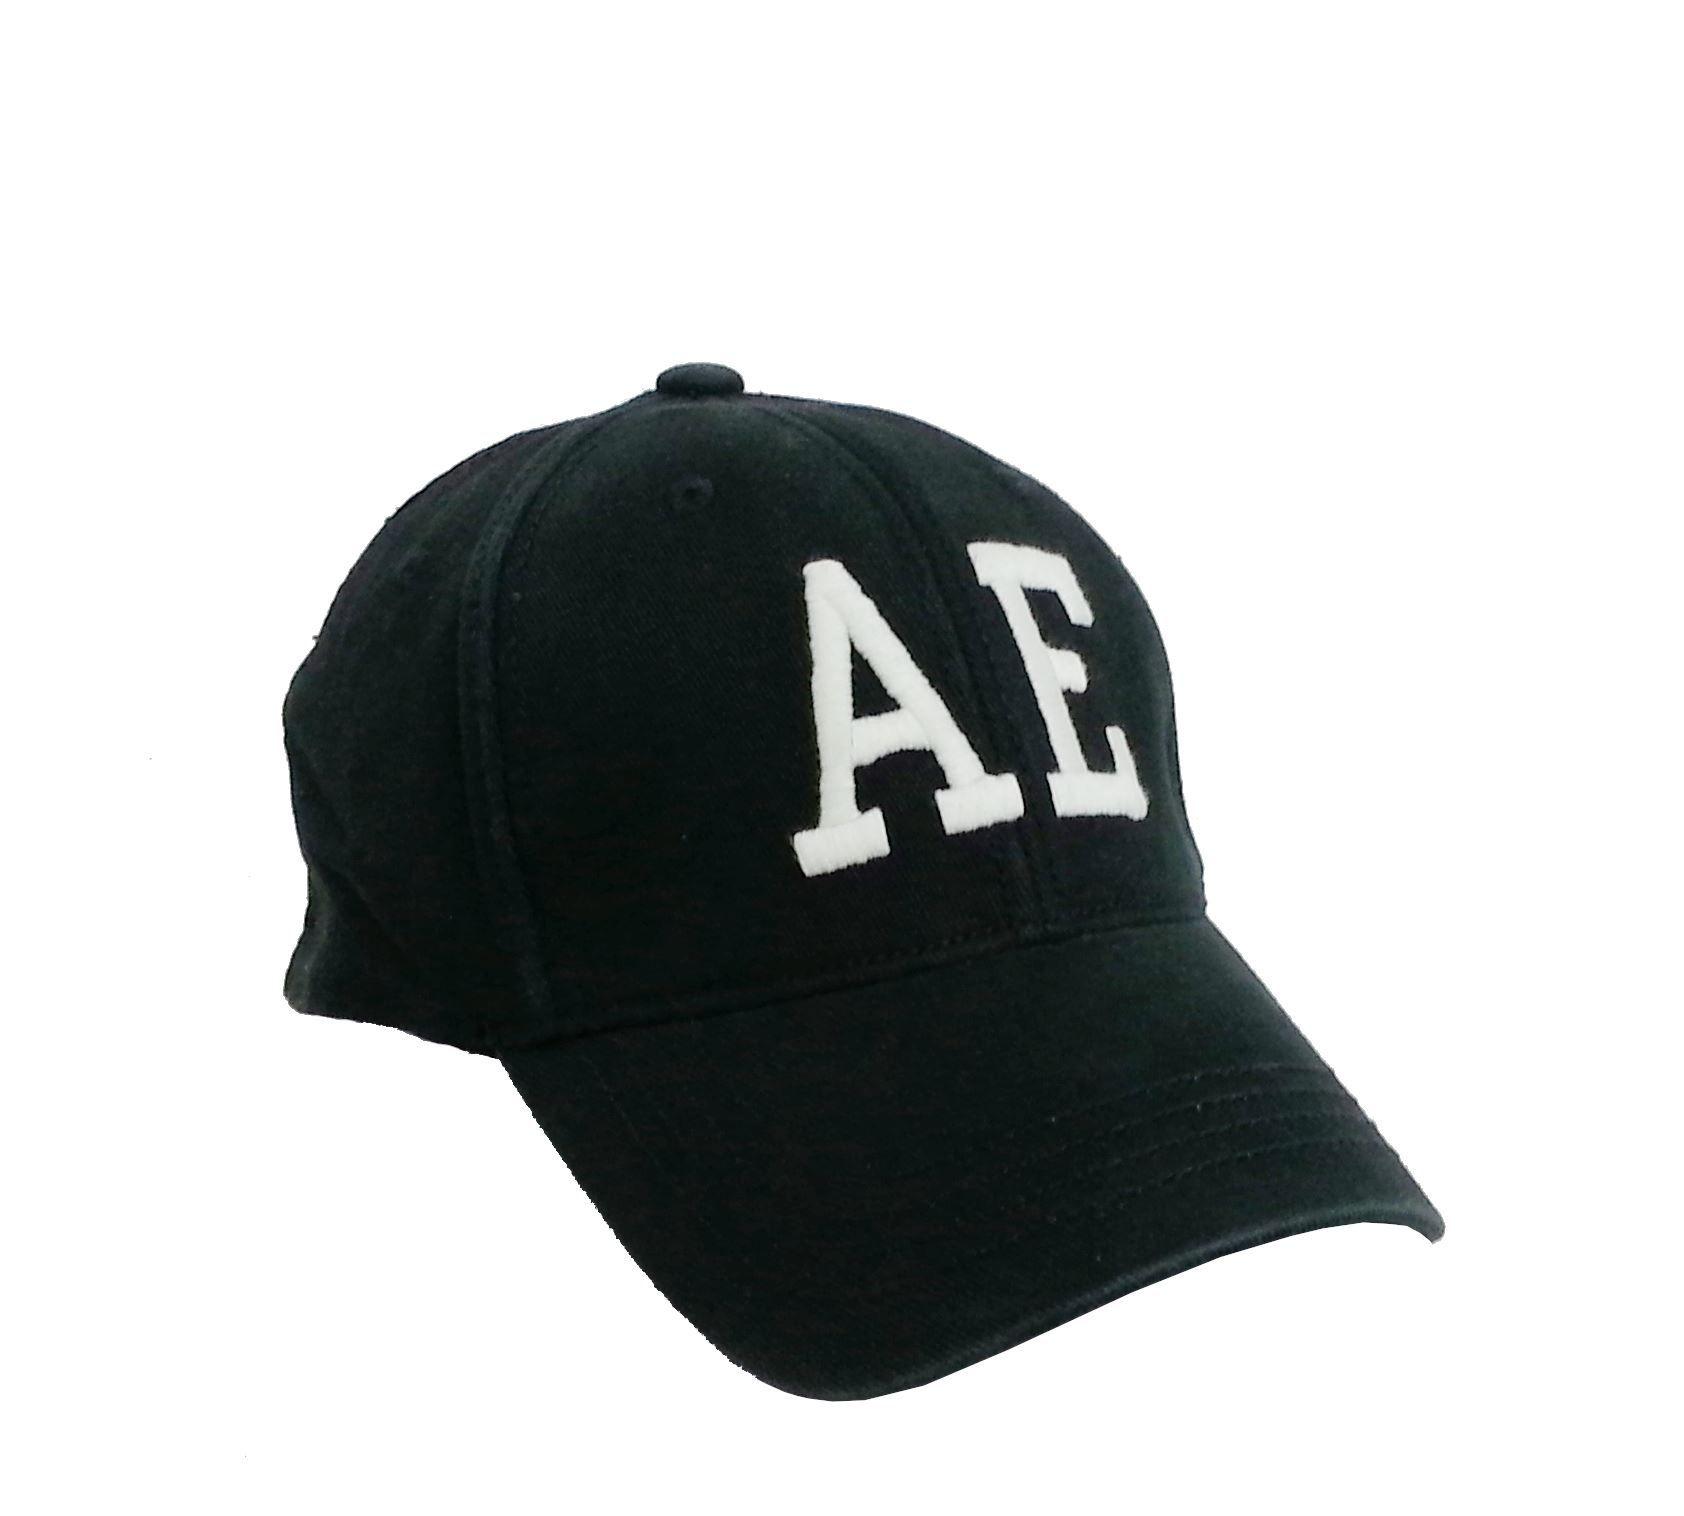 White American Eagle Logo - American Eagle Outfitters Black w/ White AE Logo Adult Baseball Cap